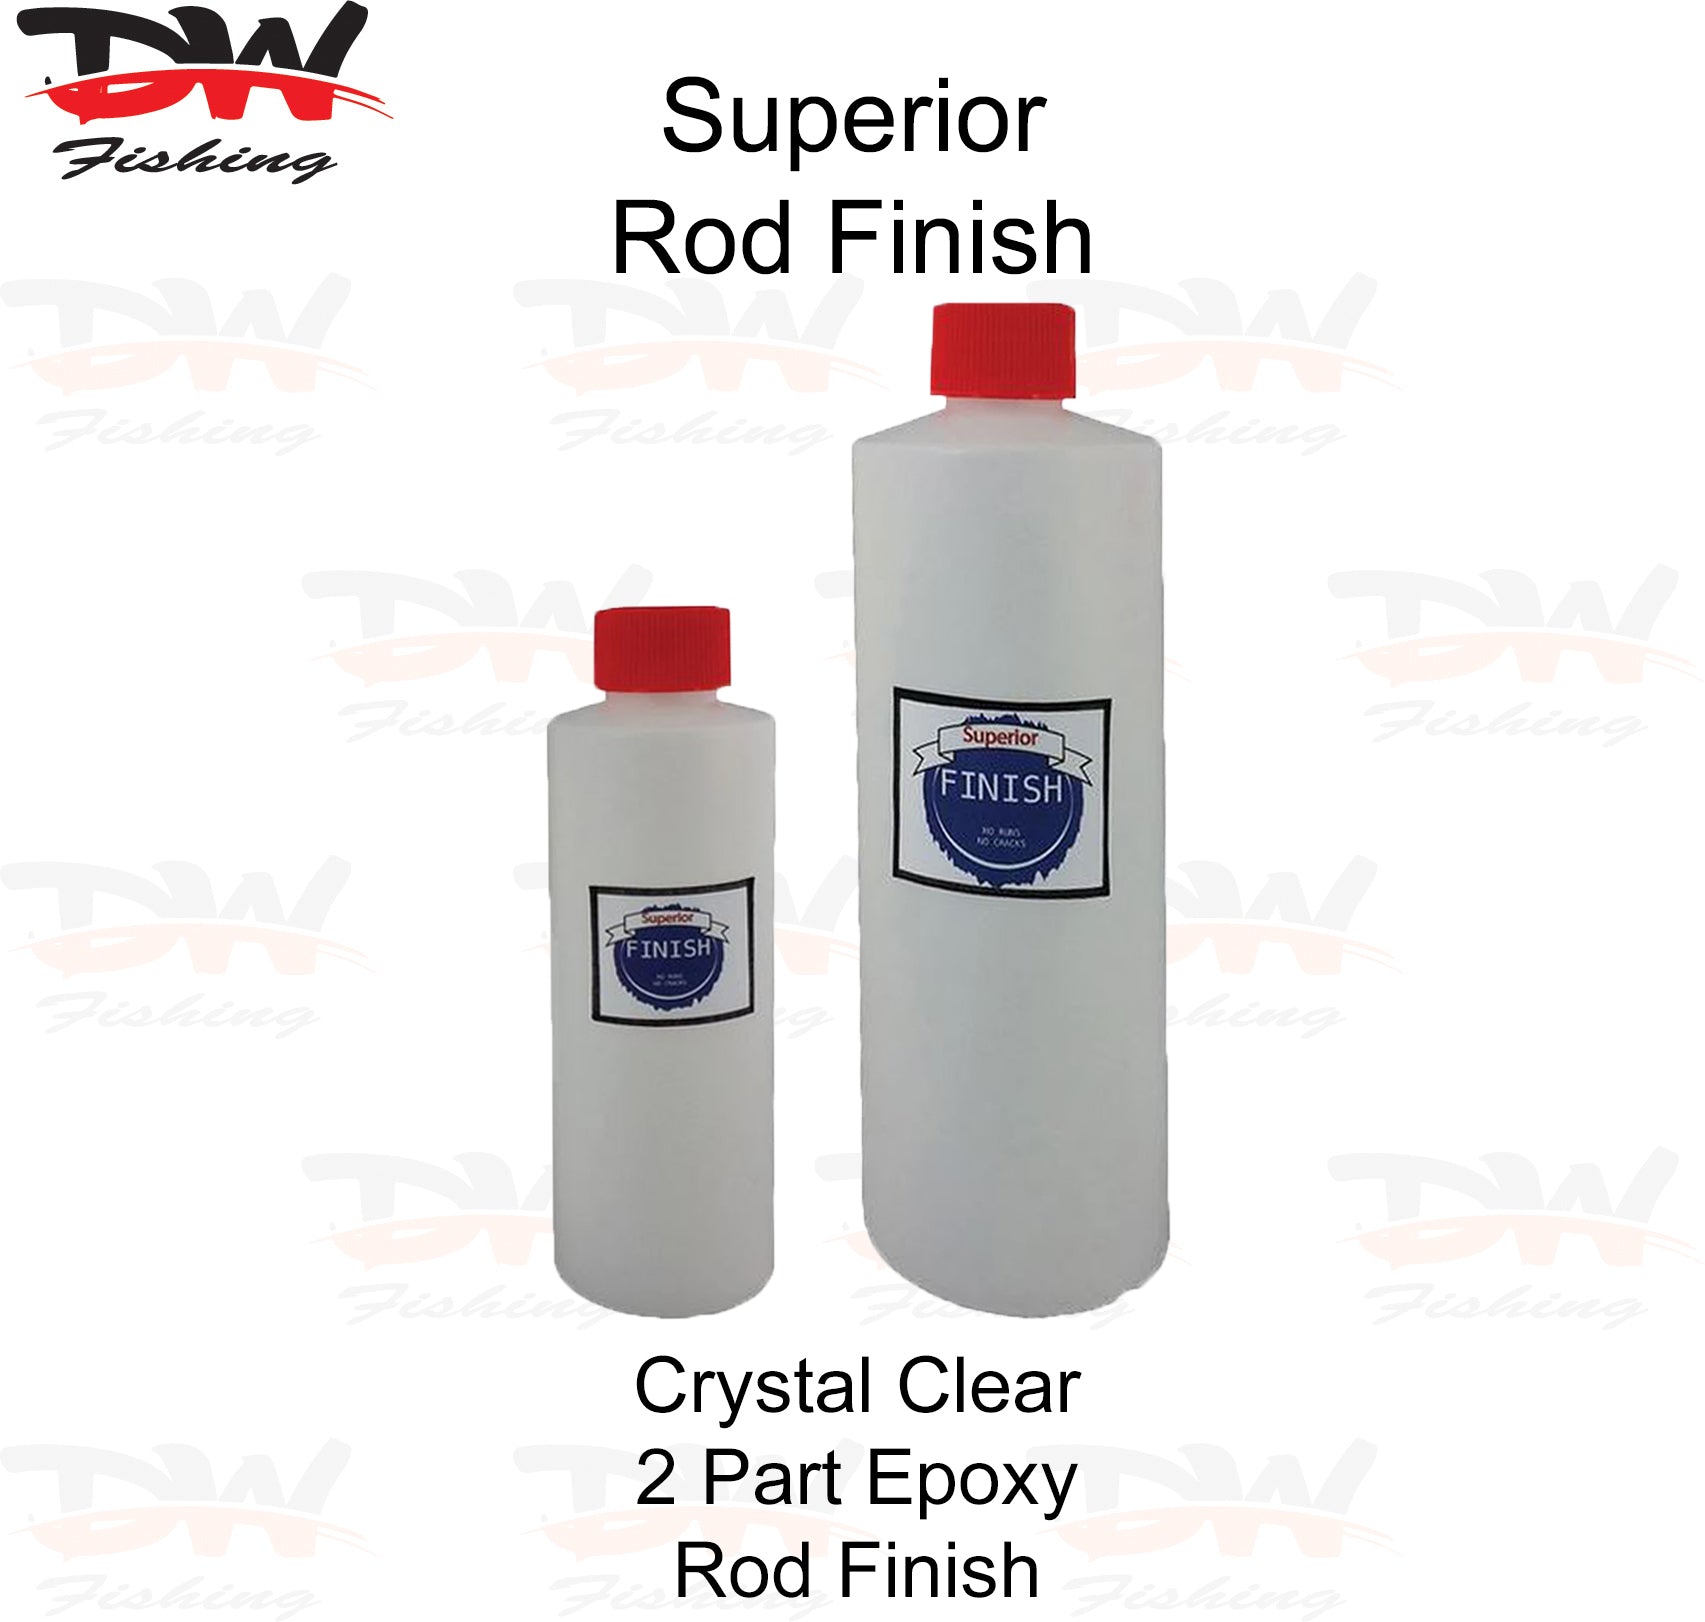 Crystal Clear Epoxy Rod Finish, Rod Building